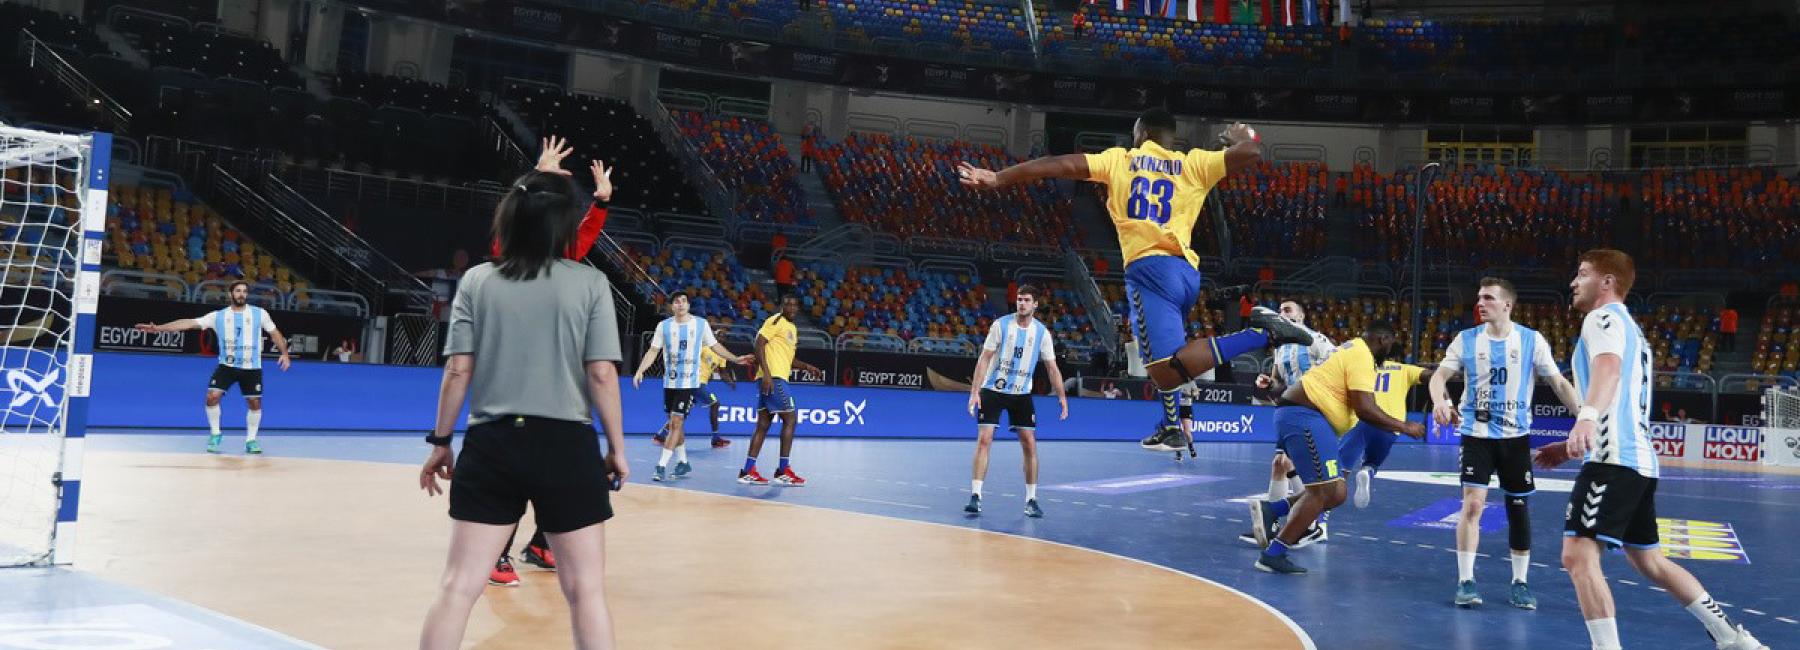 joueurs handball championnat monde